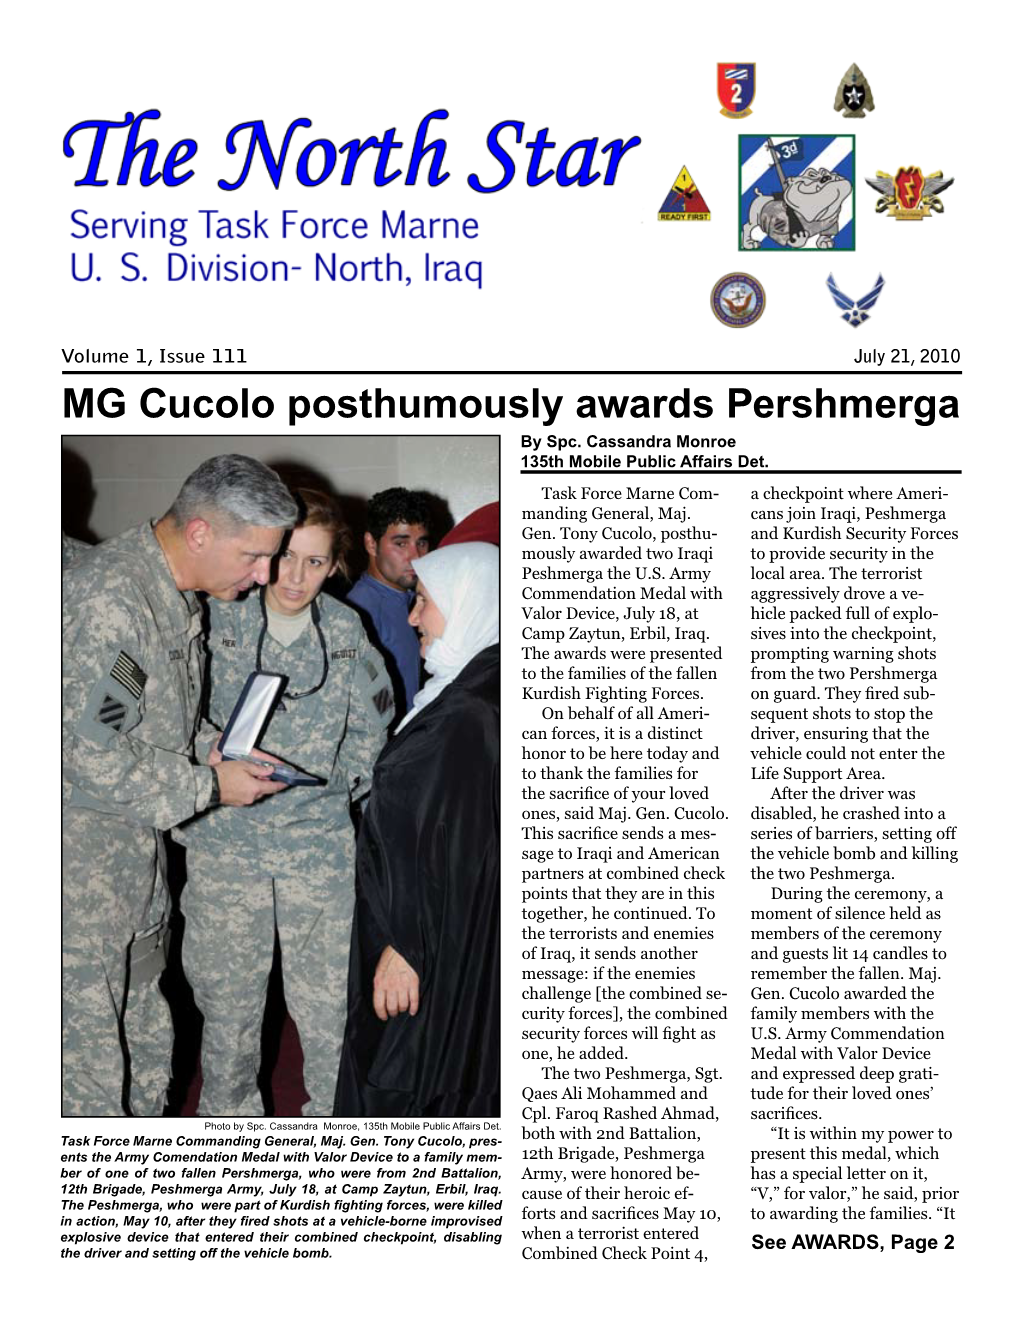 MG Cucolo Posthumously Awards Pershmerga by Spc